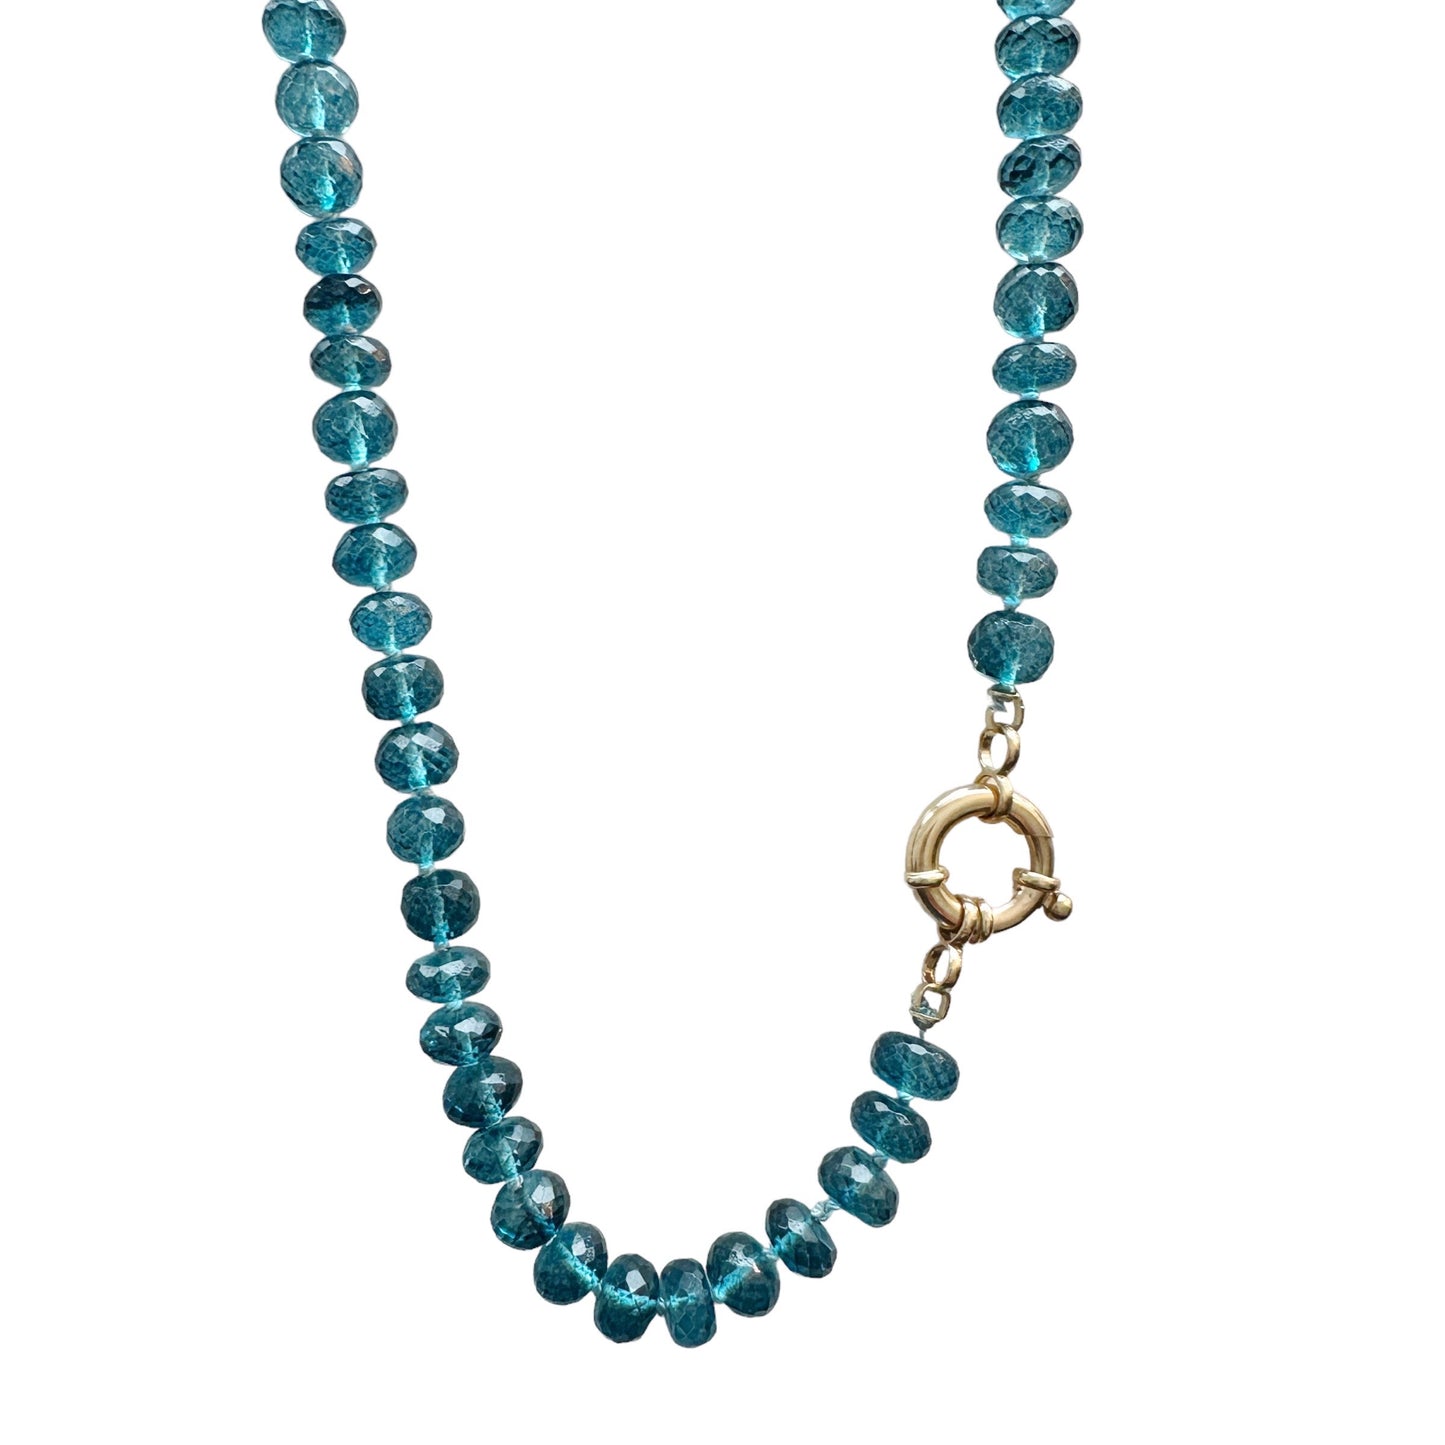 London Blue Quartz Gemstone Necklace